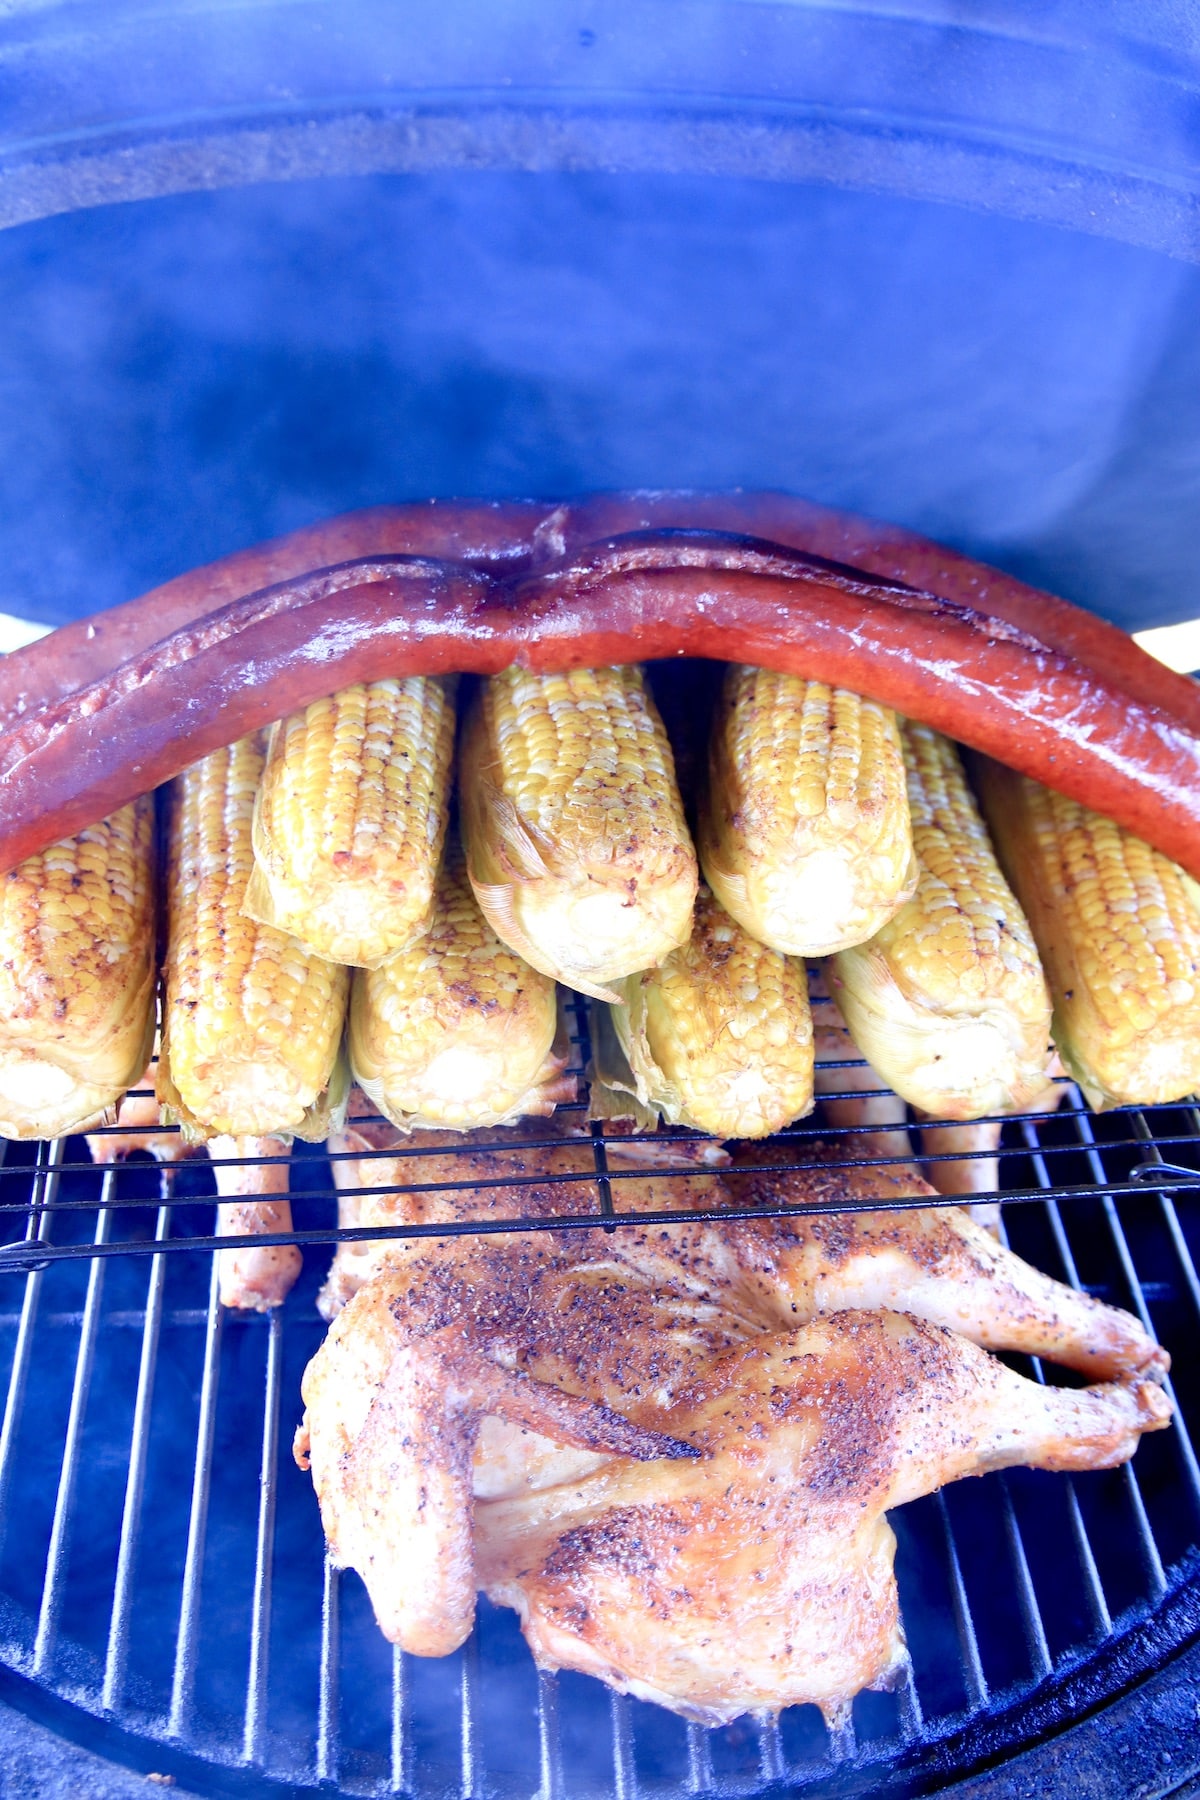 Smoky grill with chicken, corn on the cob, smoked sausage.